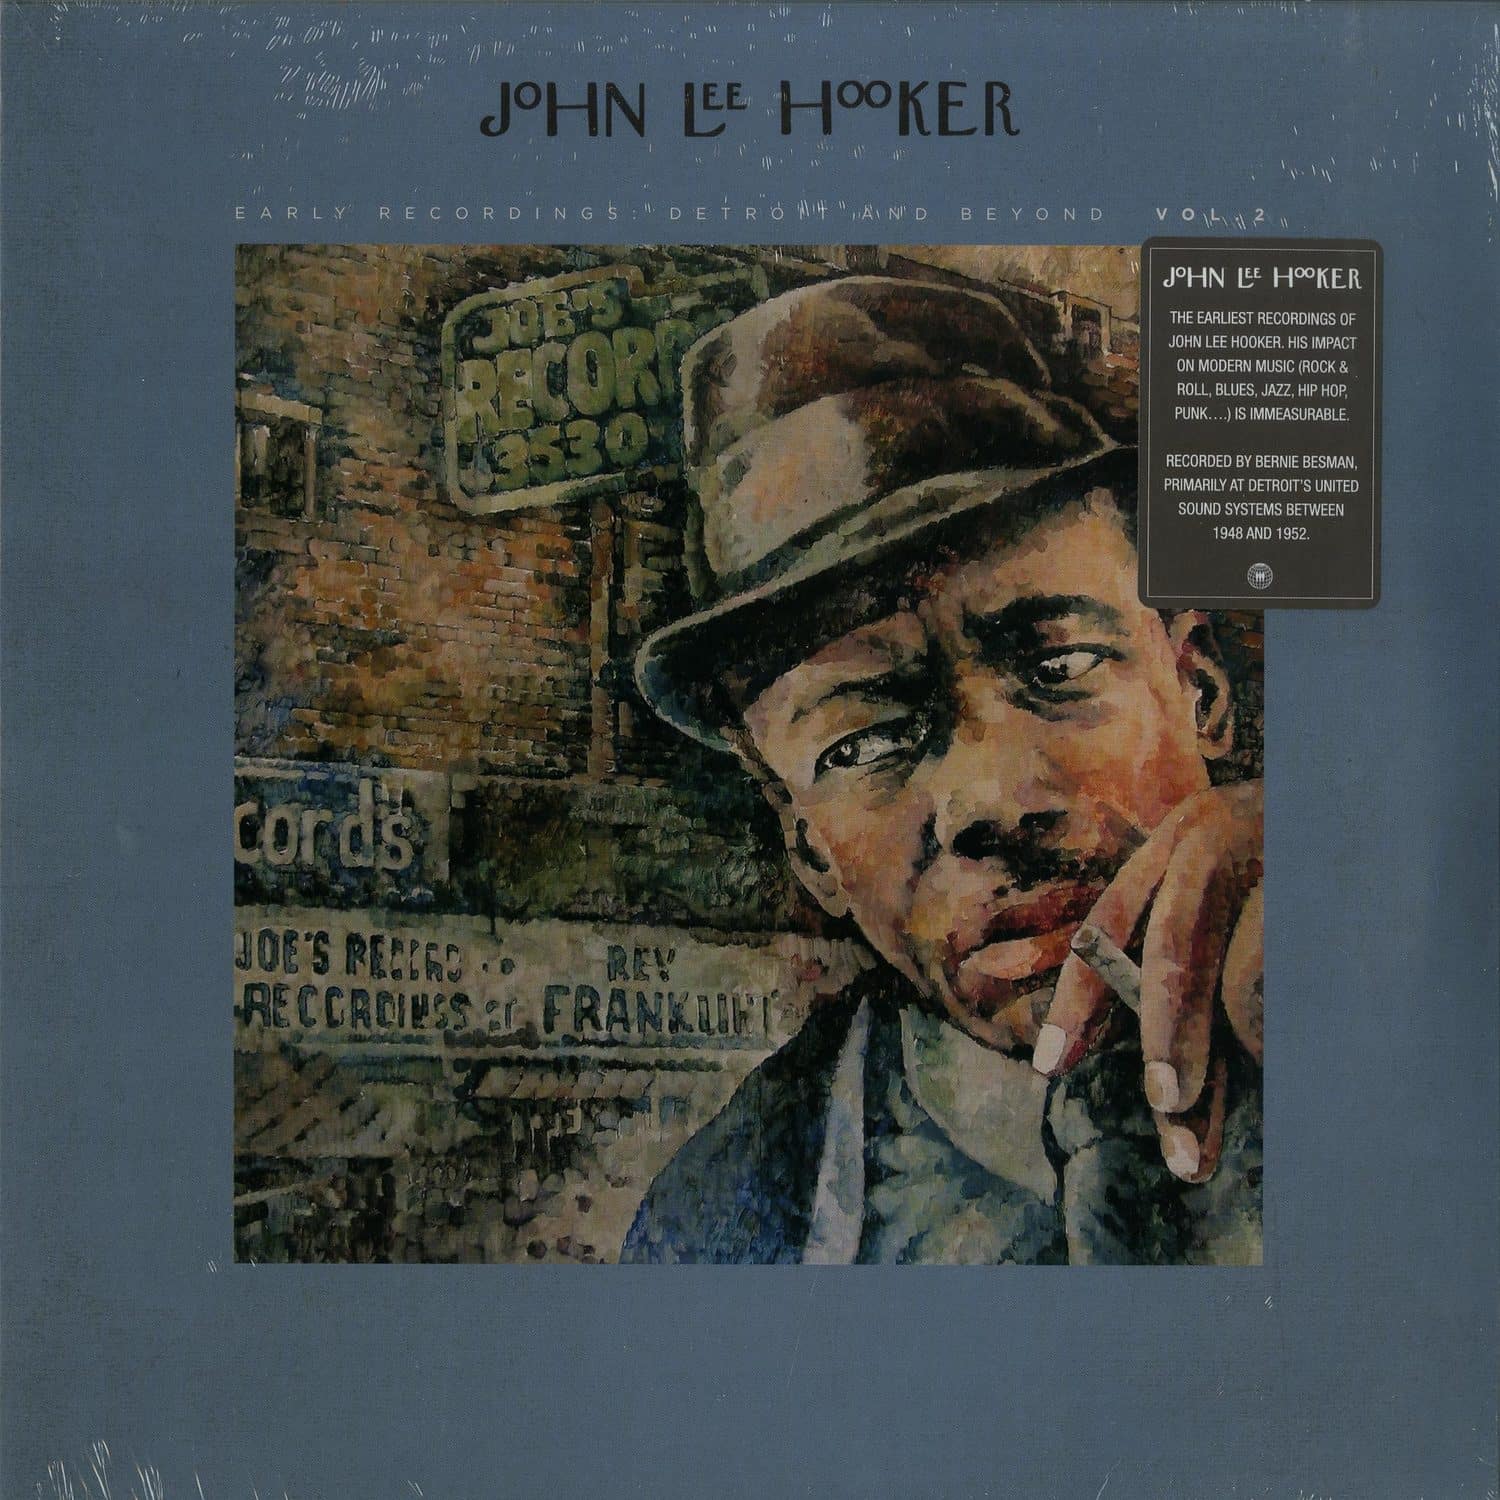 John Lee Hooker - EARLY RECORDINGS: DETROIT AND BEYOND VOL. 2 